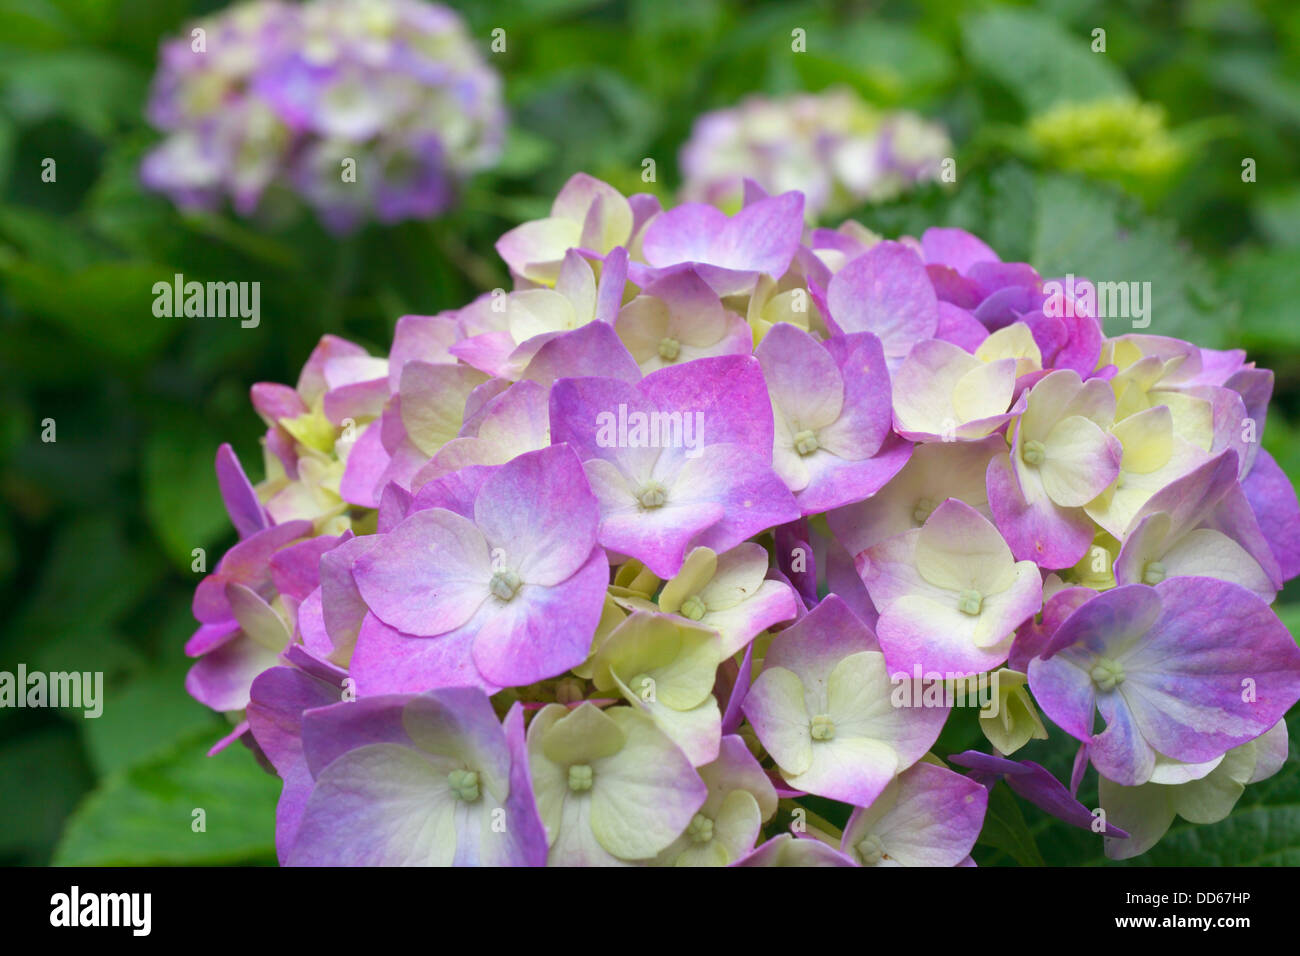 Hydrangea flowers Stock Photo